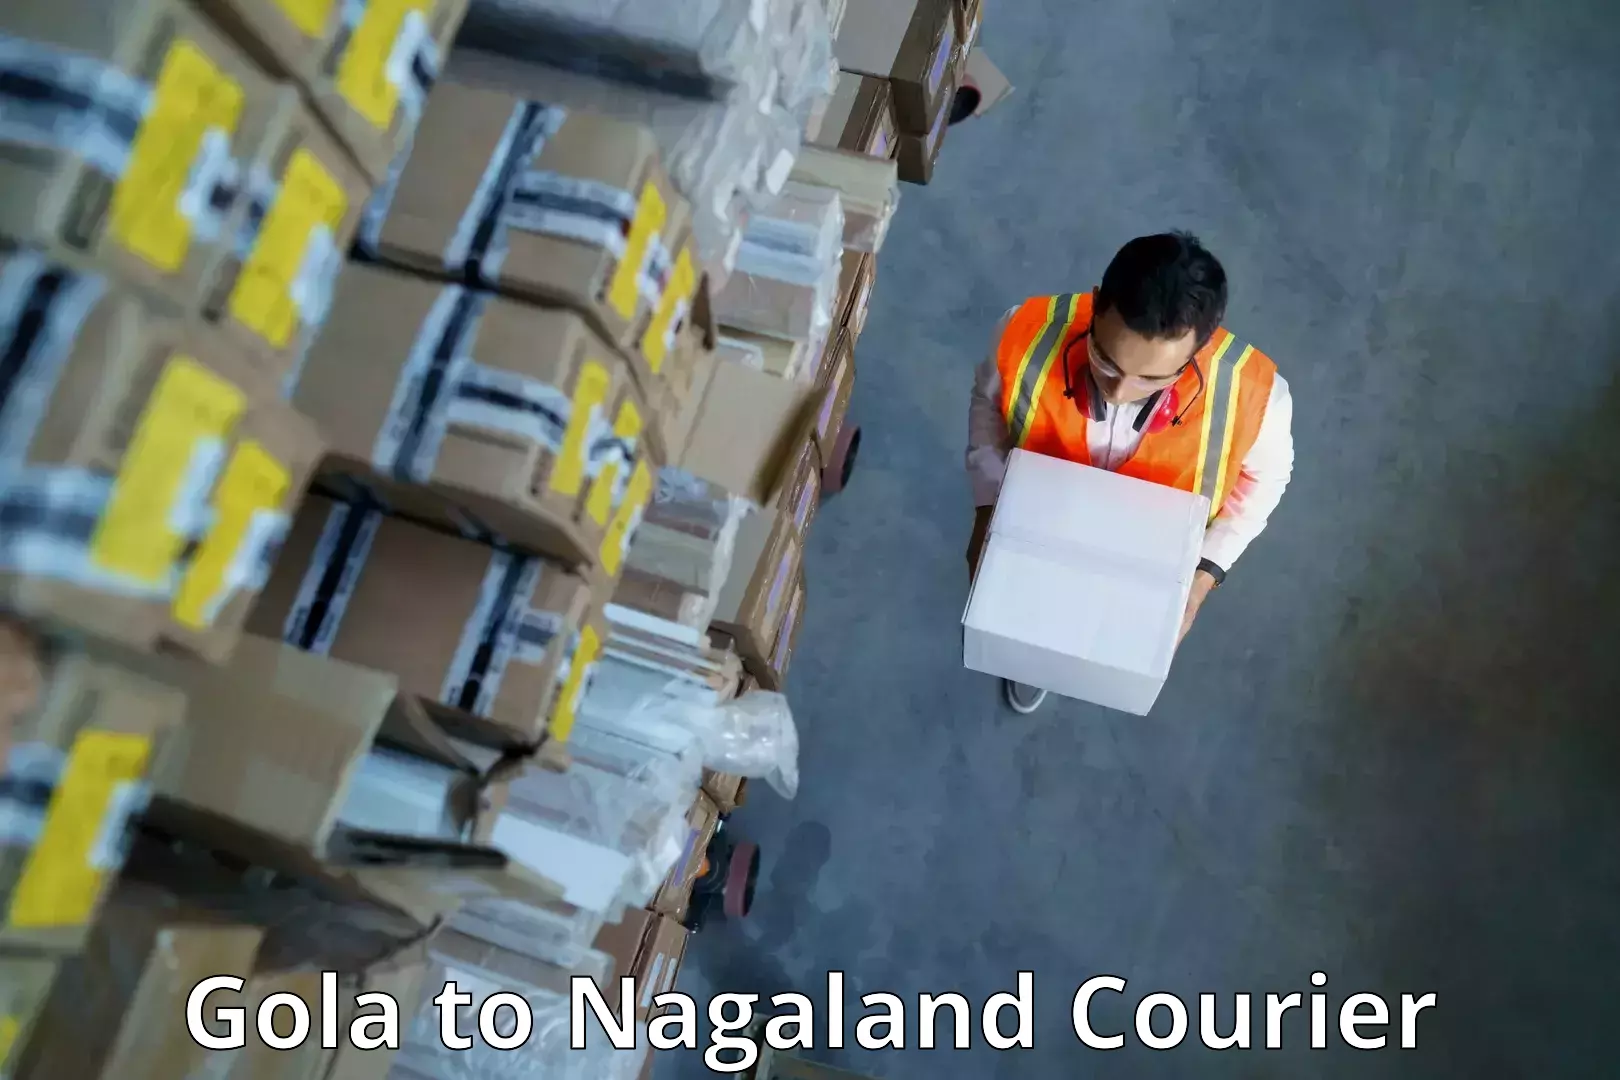 Courier service comparison Gola to Dimapur